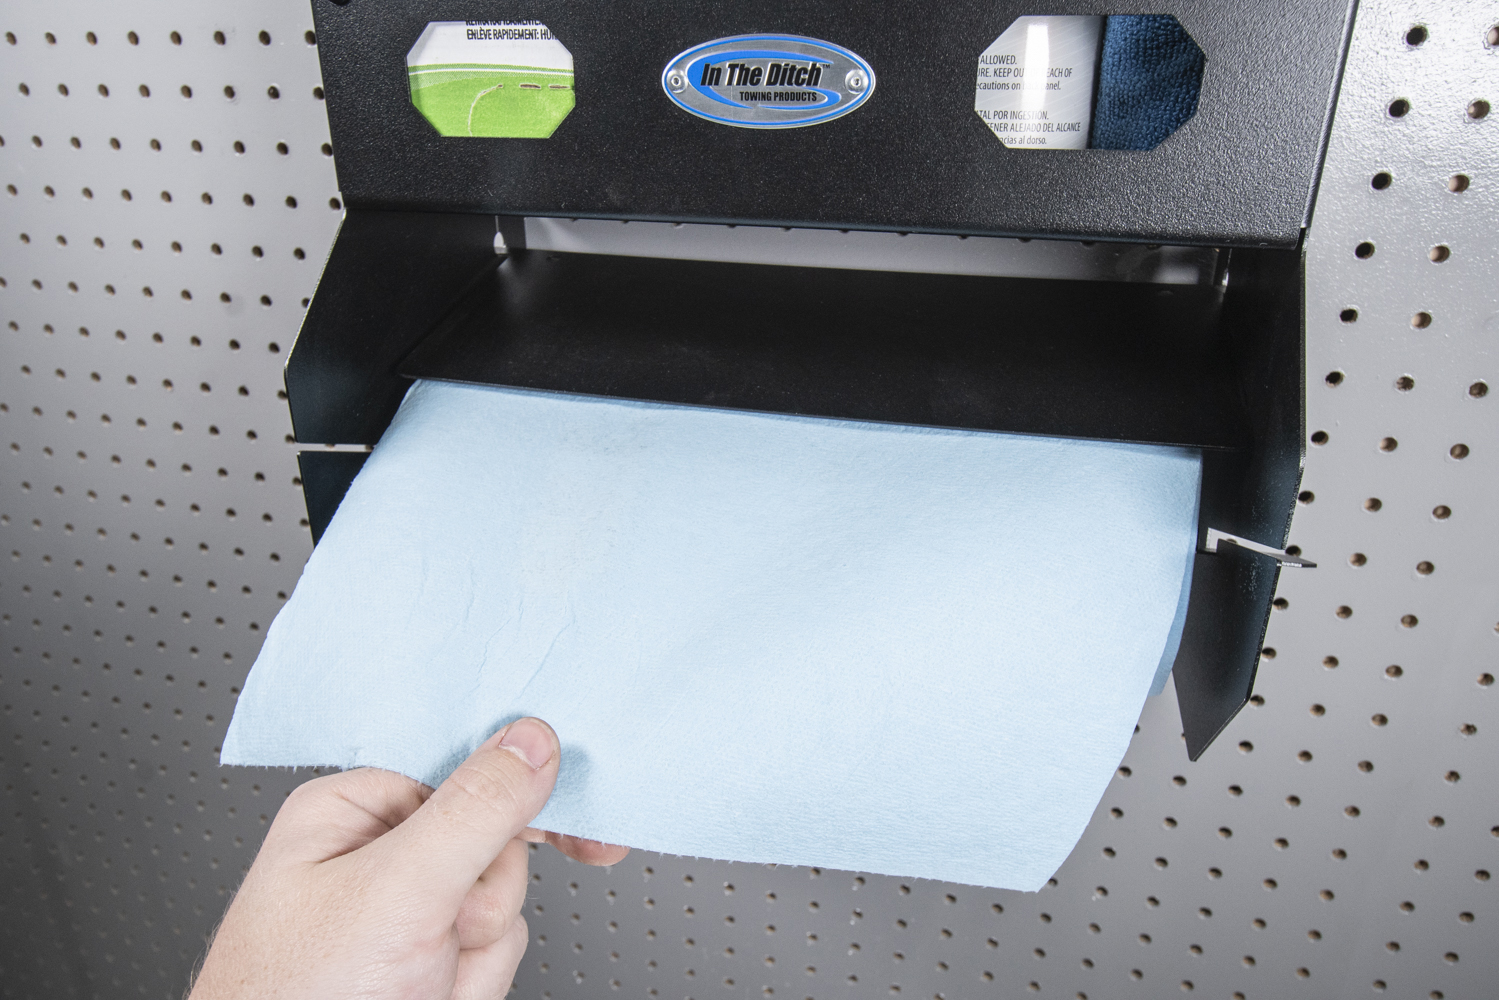 https://intheditch.com/wp-content/uploads/446-In-The-Ditch-Garage-Paper-Towel-Holder-Single-no-Shelf-ITD1771.jpg